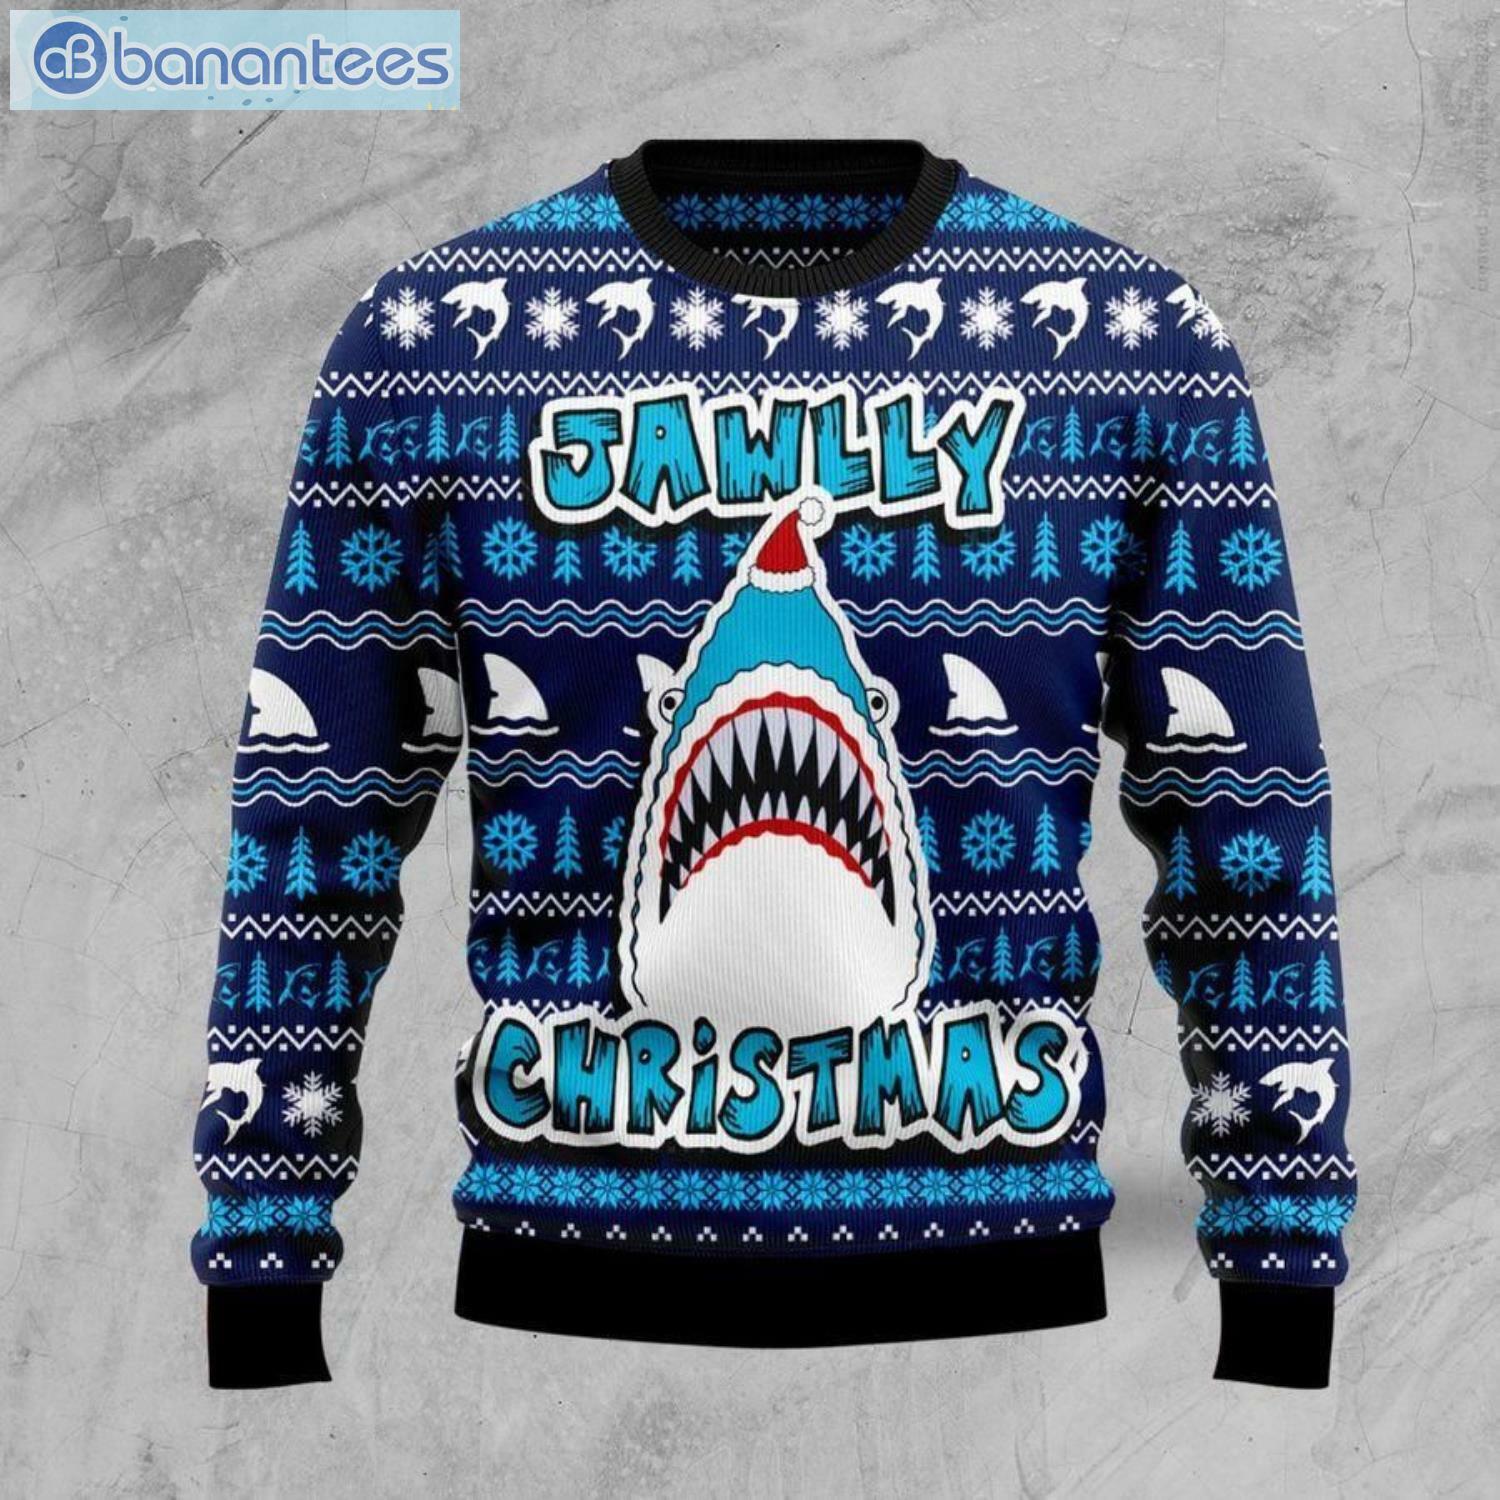 Shark Jawlly Christmas Ugly Sweater Product Photo 1 Product photo 1